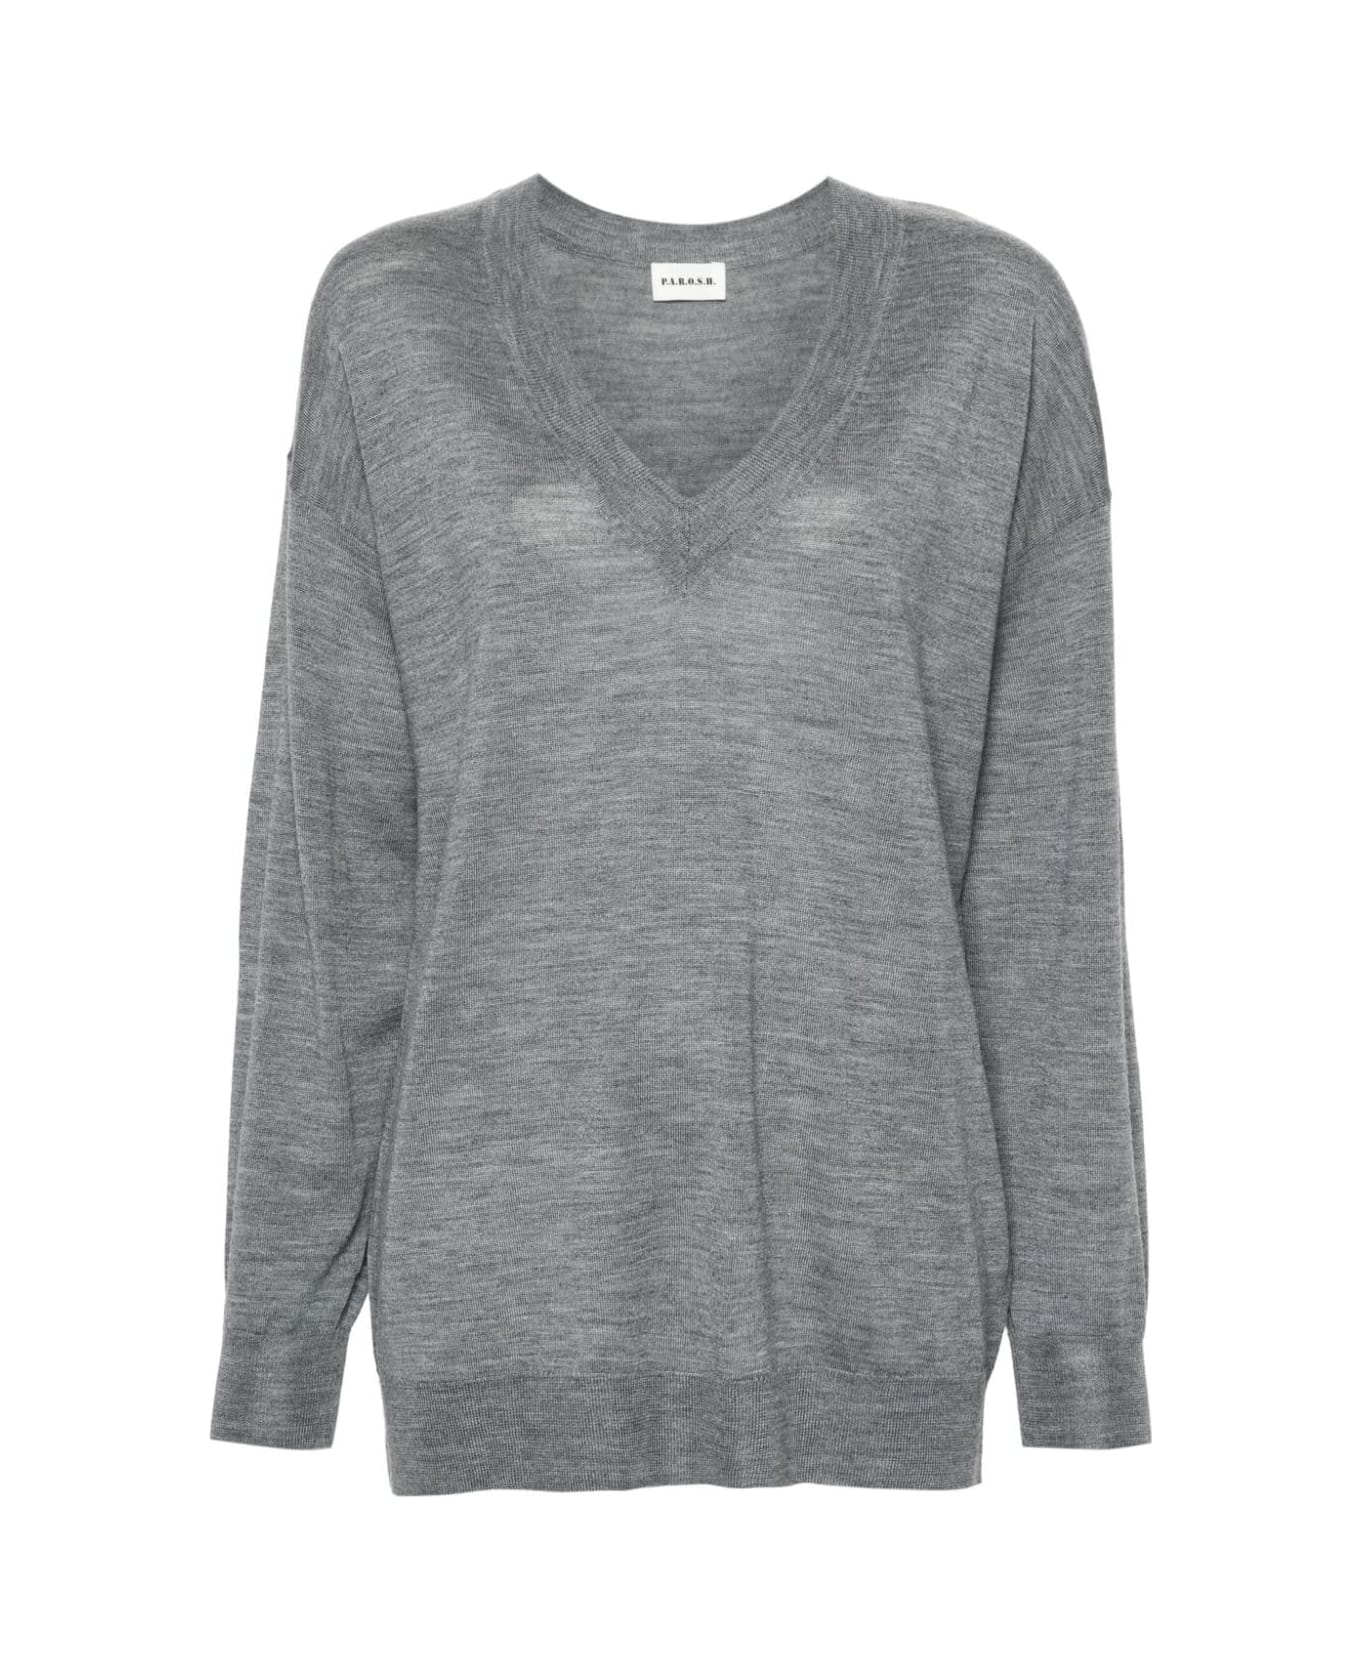 Parosh Oversized V Neck Sweater - Light Grey Melange